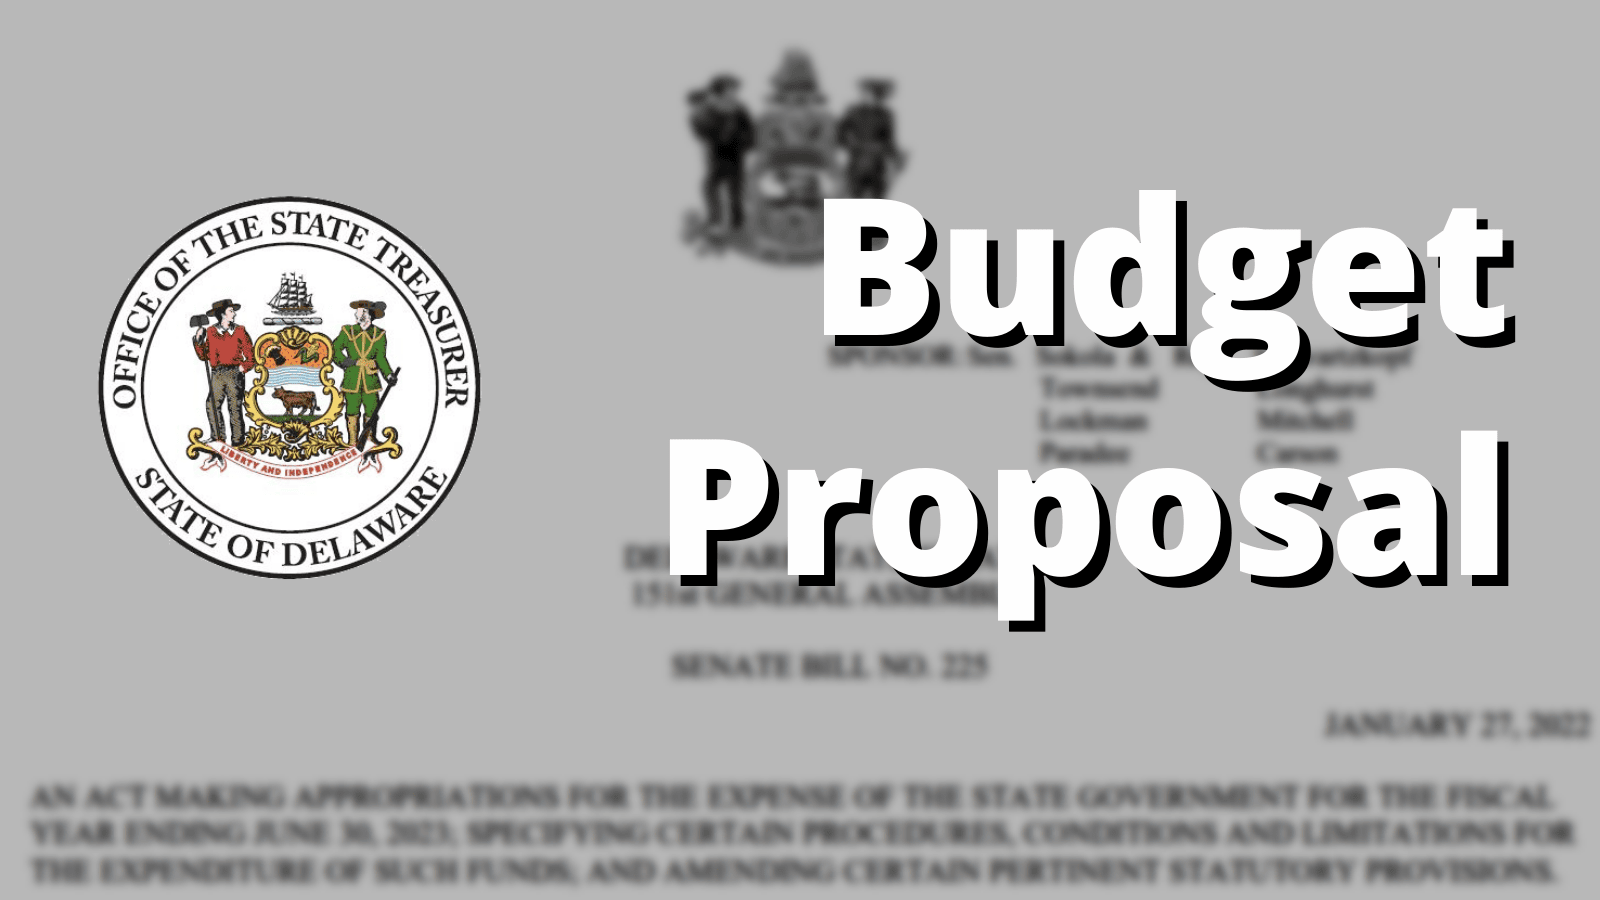 Budget Proposal